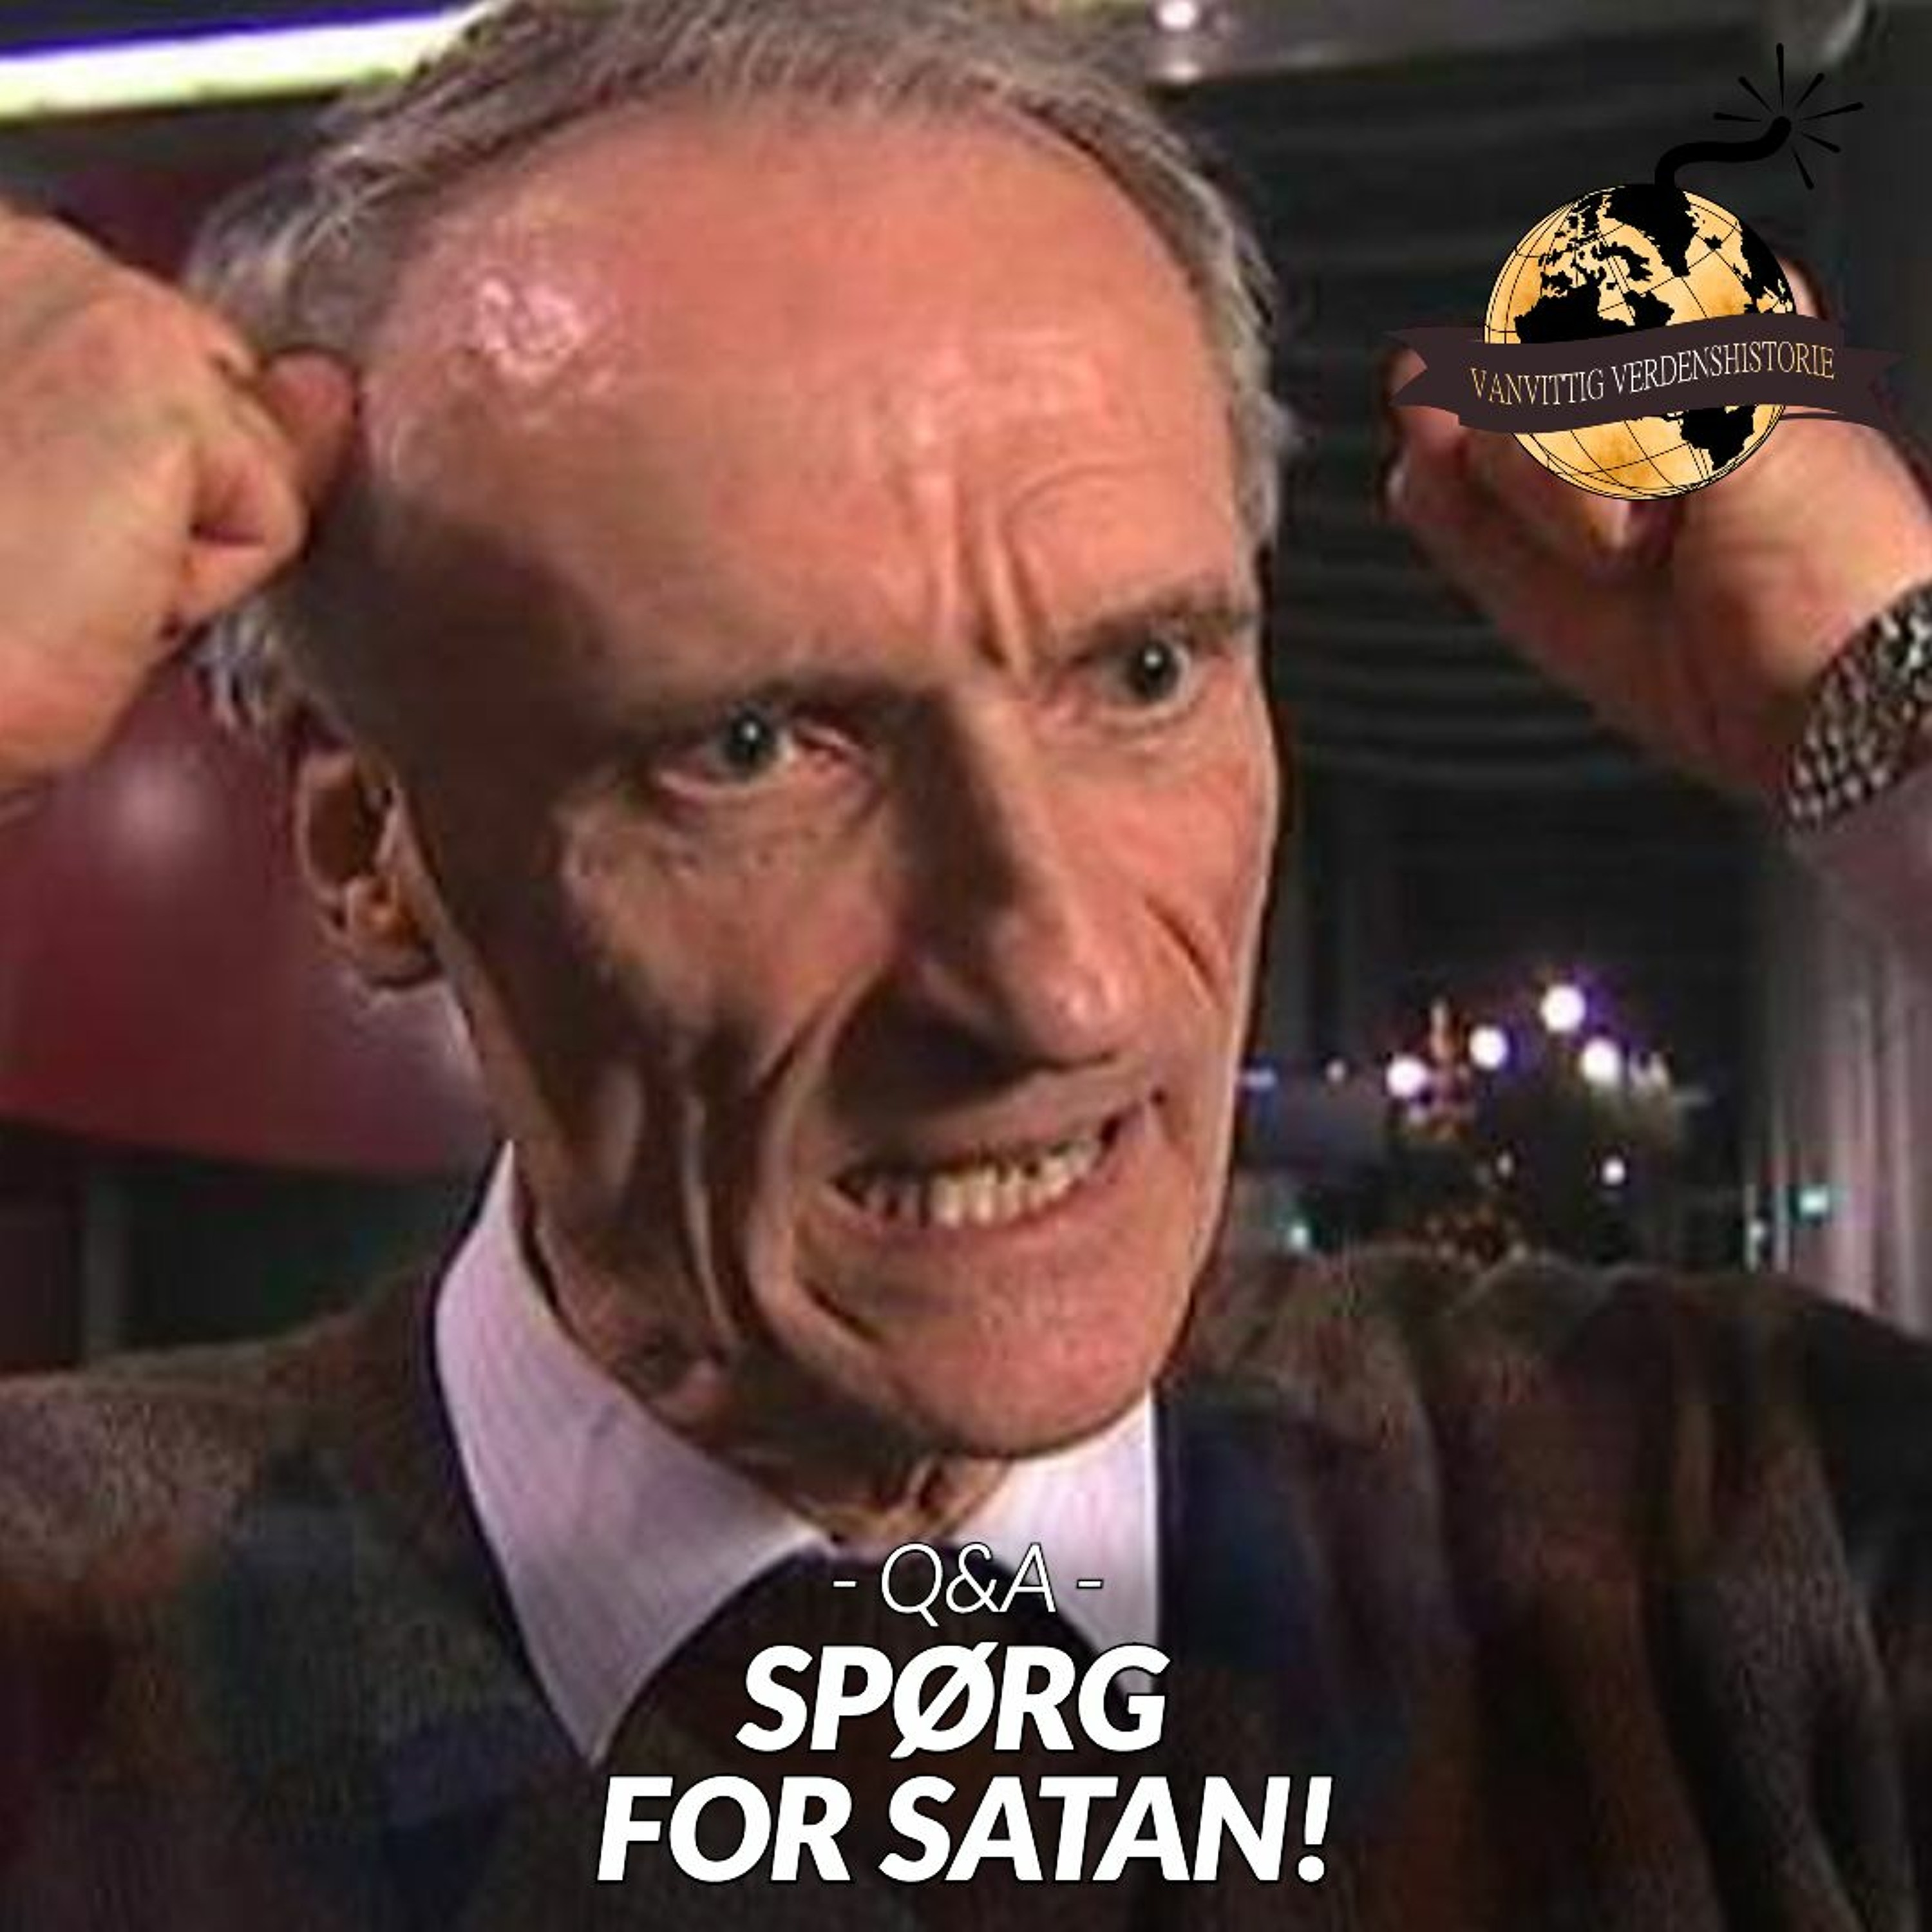 Q&A #5: Spørg for satan!